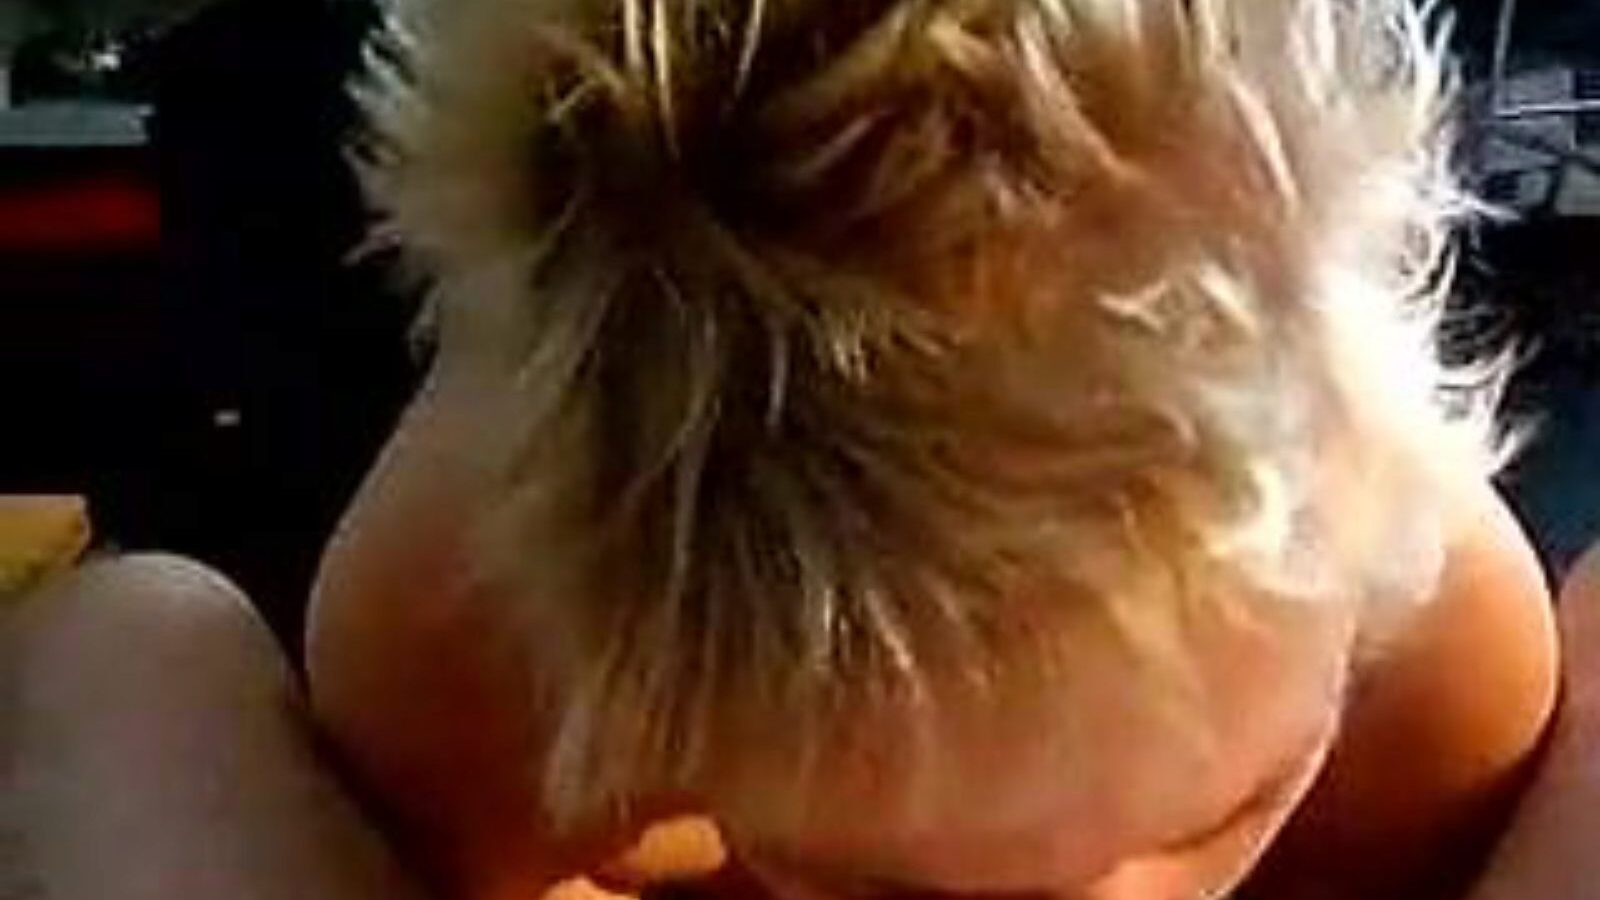 leuke dame: σπιτικό και παλιό κορίτσι πορνό βίντεο a6 - xhamster παρακολουθήστε leuke dame tube fuckfest ταινία δωρεάν στο xhamster, με την πιο καυτή συλλογή ολλανδικών σπιτικών, ηλικιωμένων κοριτσιών & πιπίλισμα βίντεο πορνό πορνό